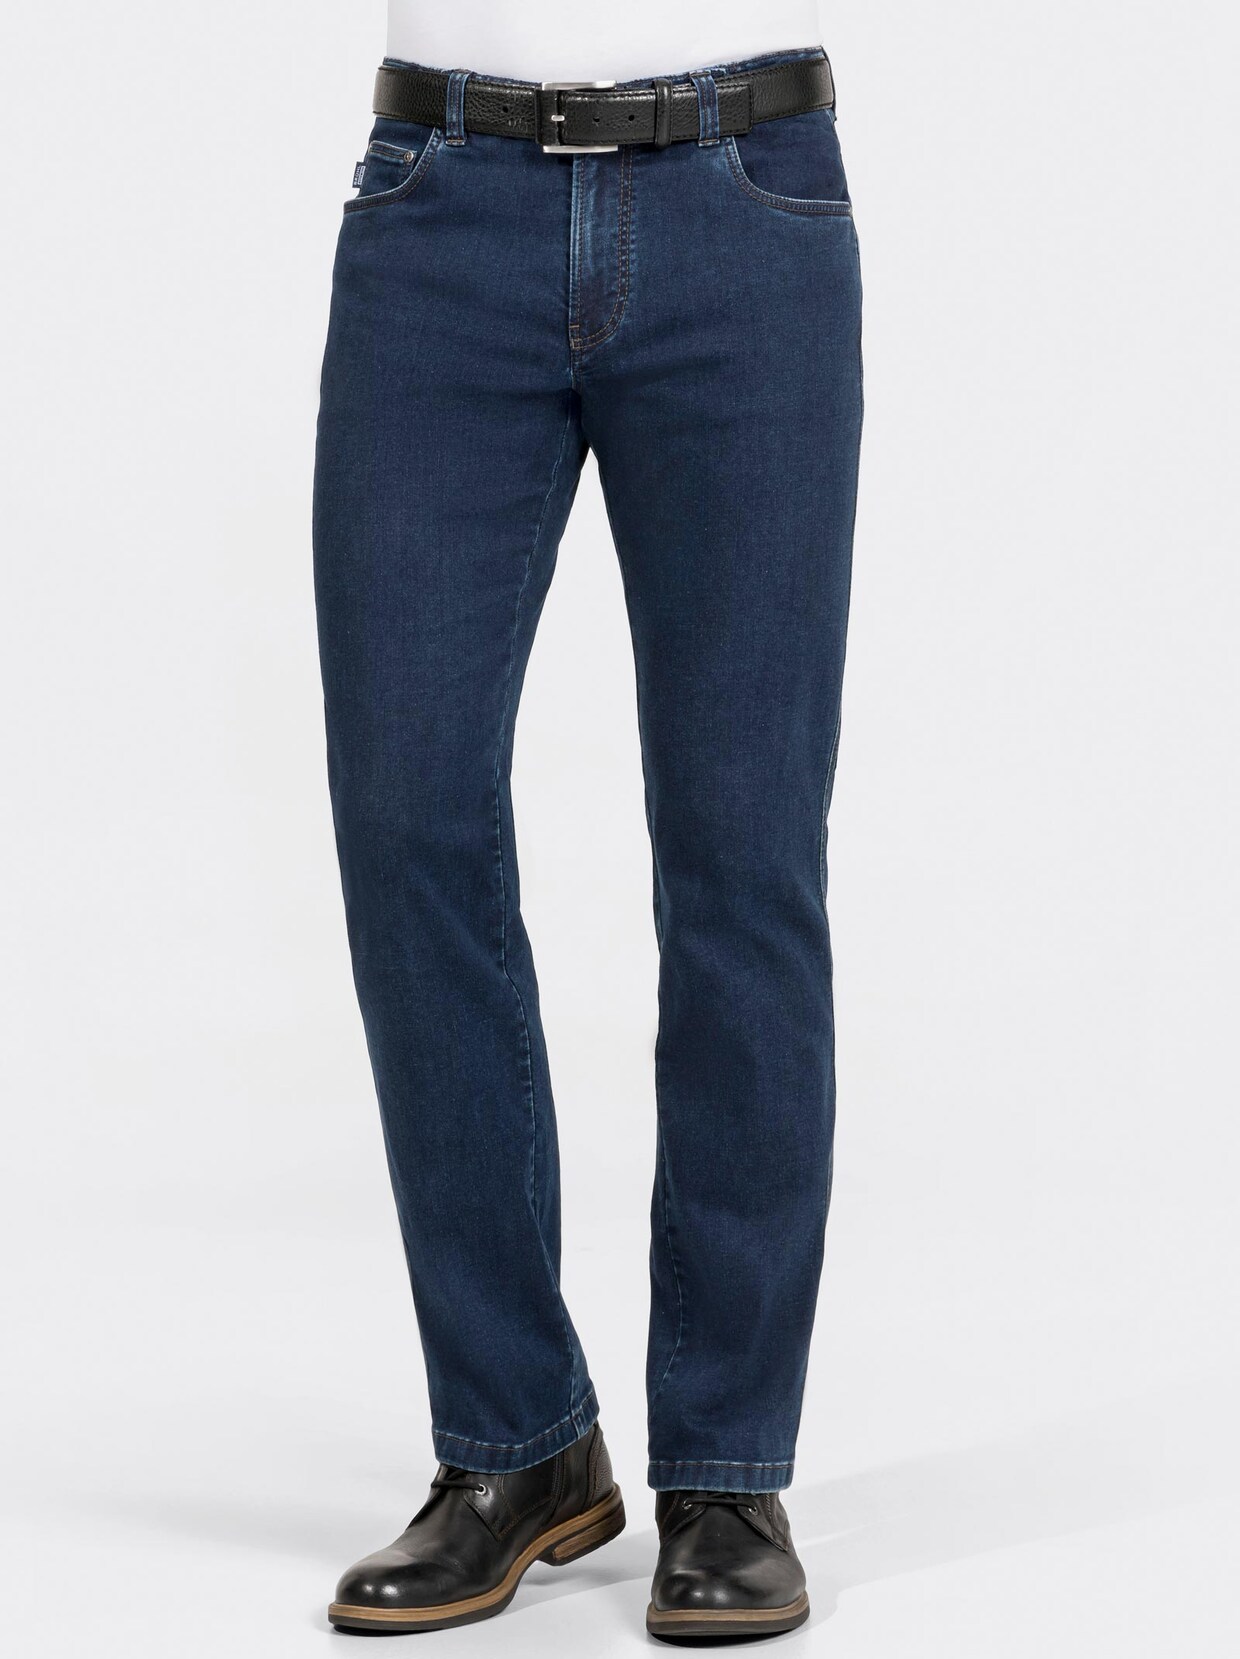 Brühl Jeans - dark blue-denim